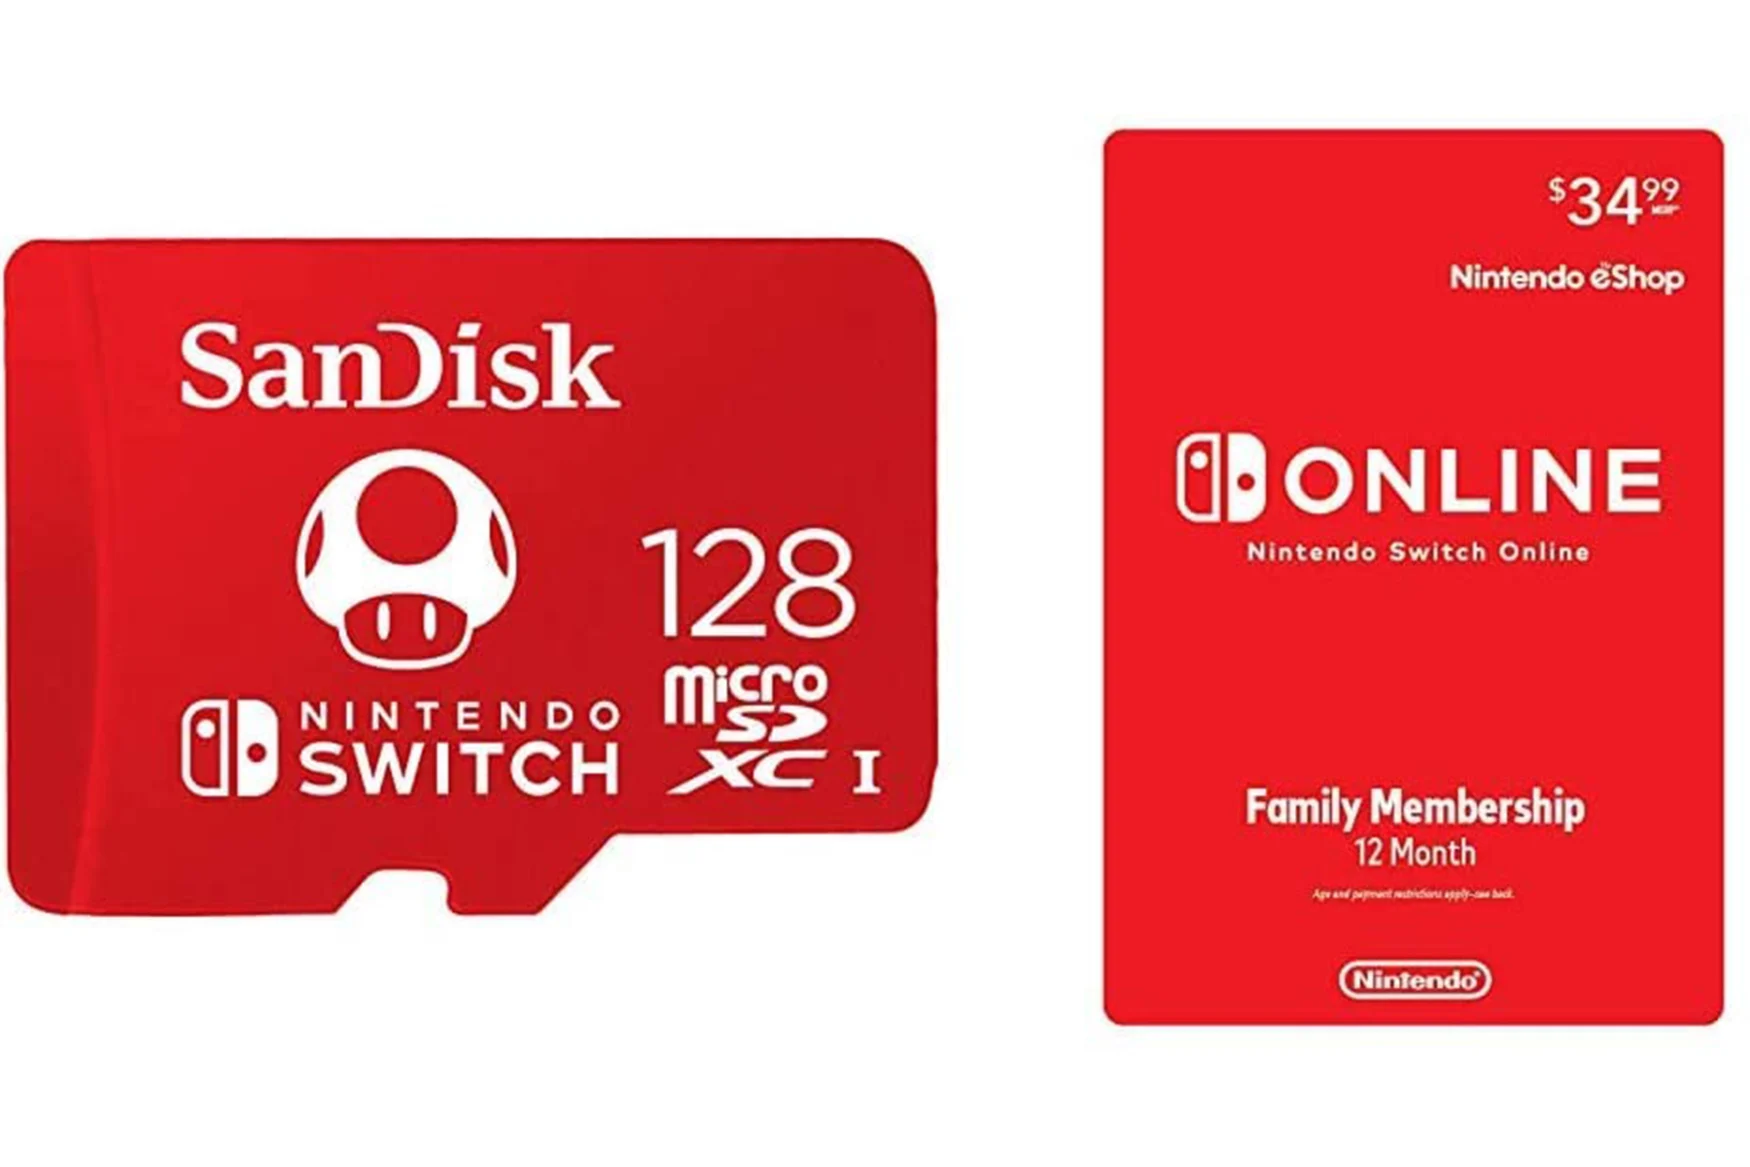 Nintendo Switch Online microSD card bundle